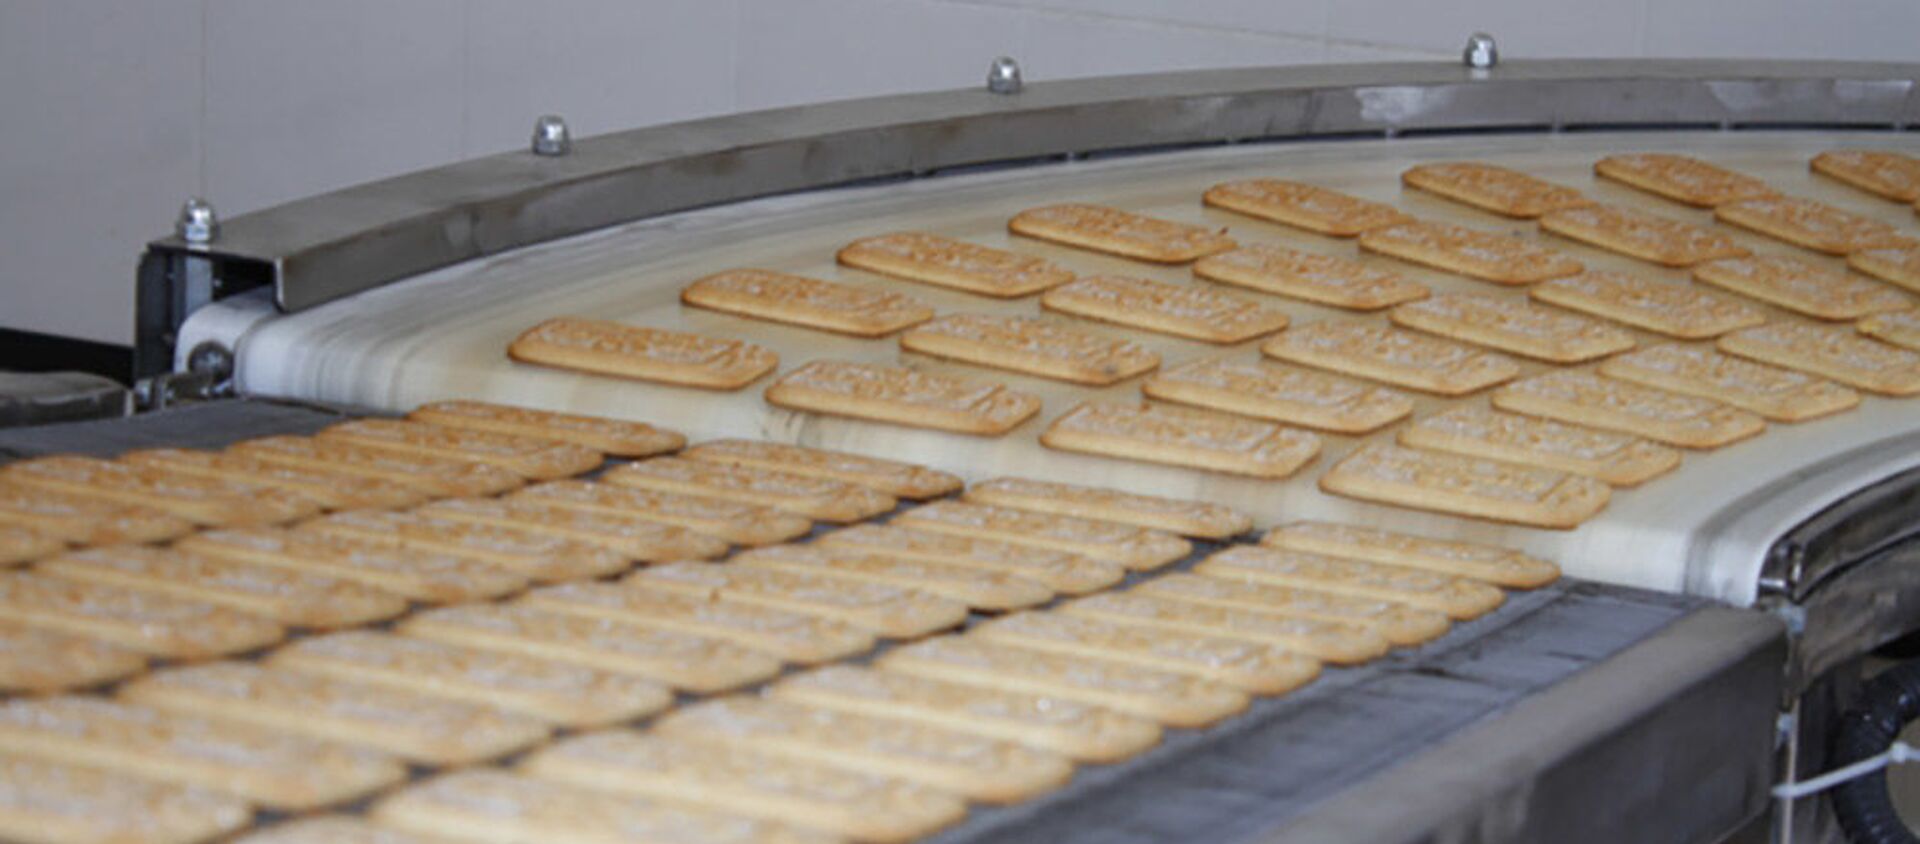 Производство печенья на предприятии «Файзи Расул» в городе Худжанд - Sputnik Таджикистан, 1920, 23.09.2020